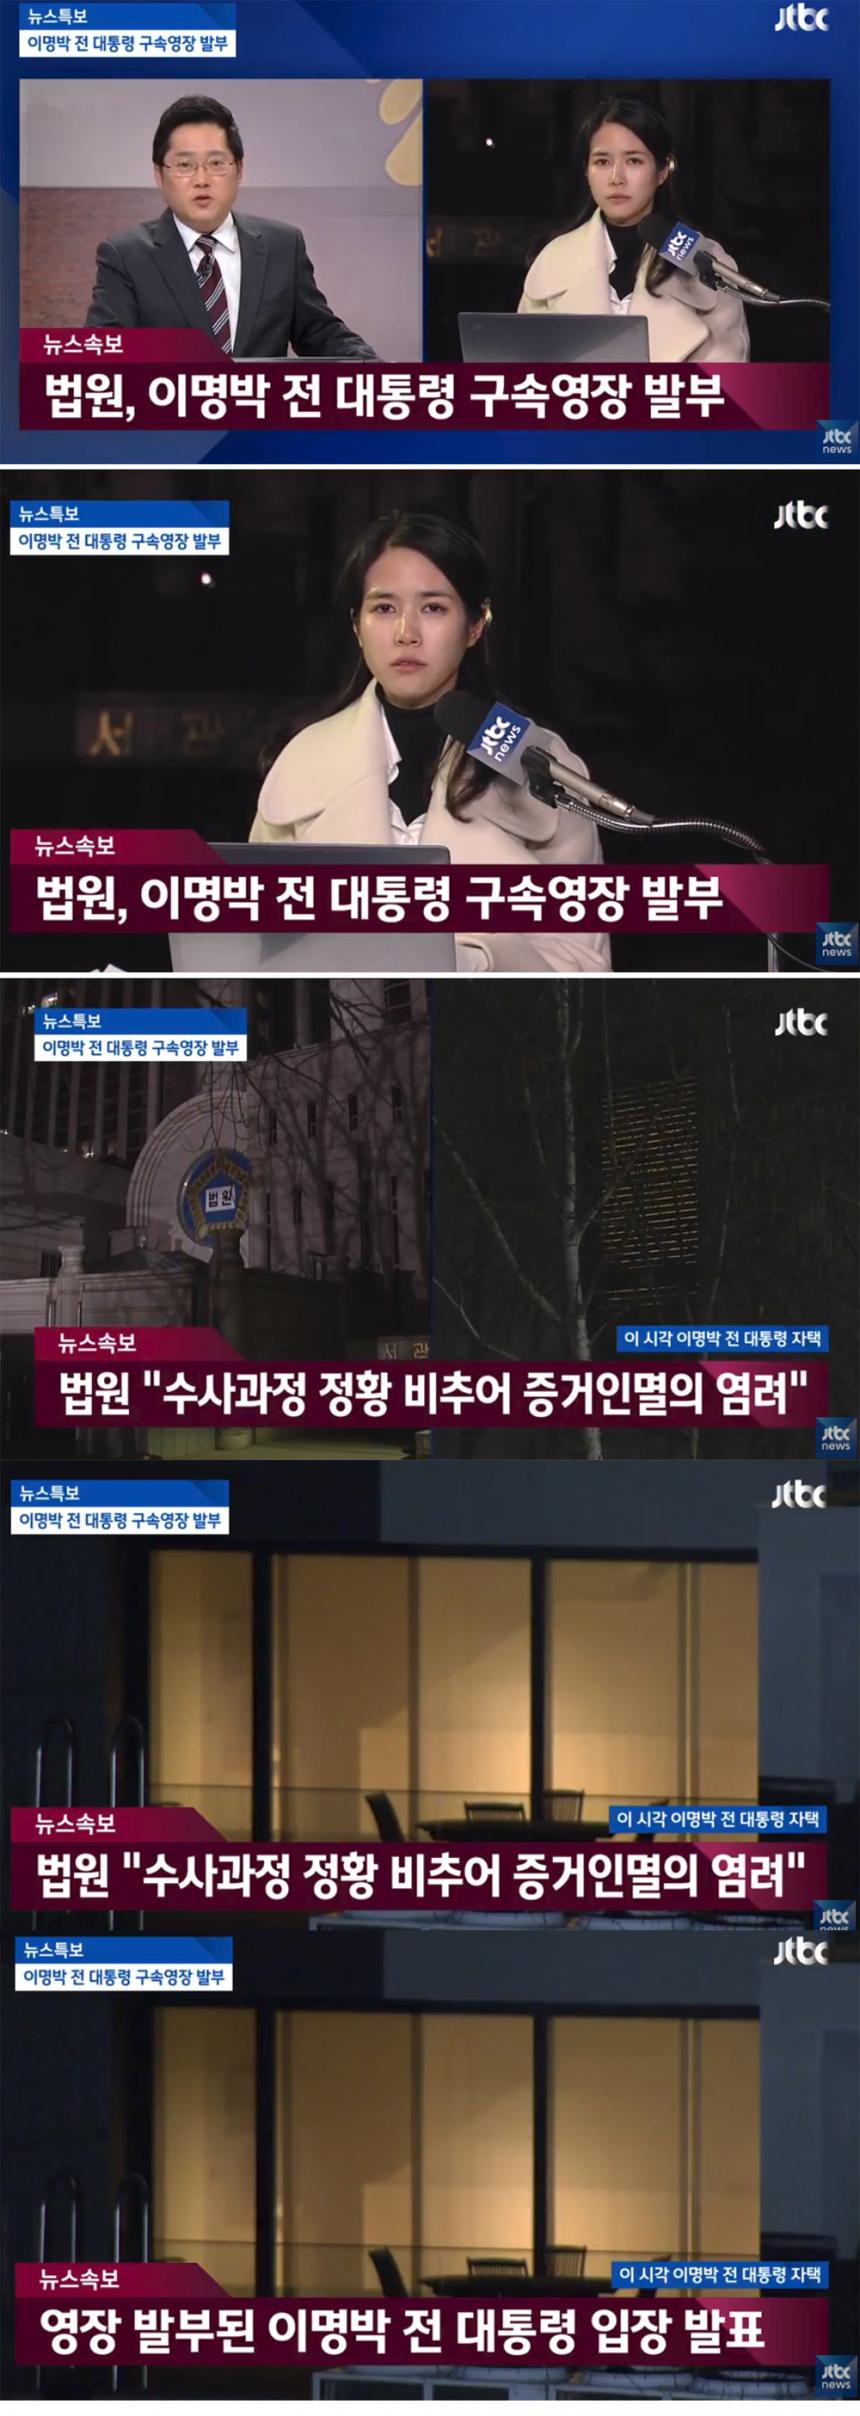 JTBC 뉴스특보 영상 캡처